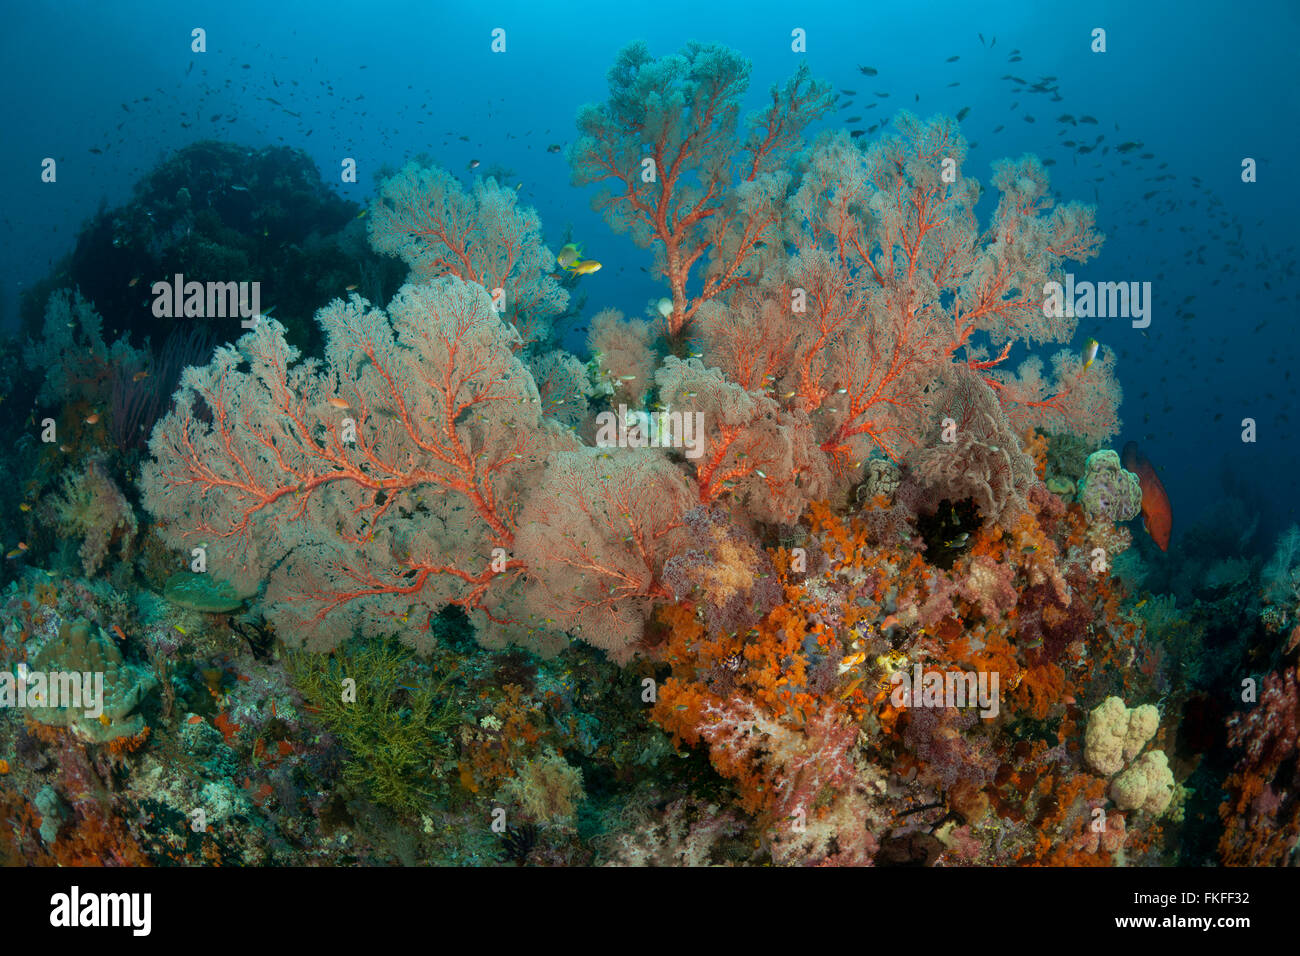 Colorful coral reef soft et gorgones. Banque D'Images